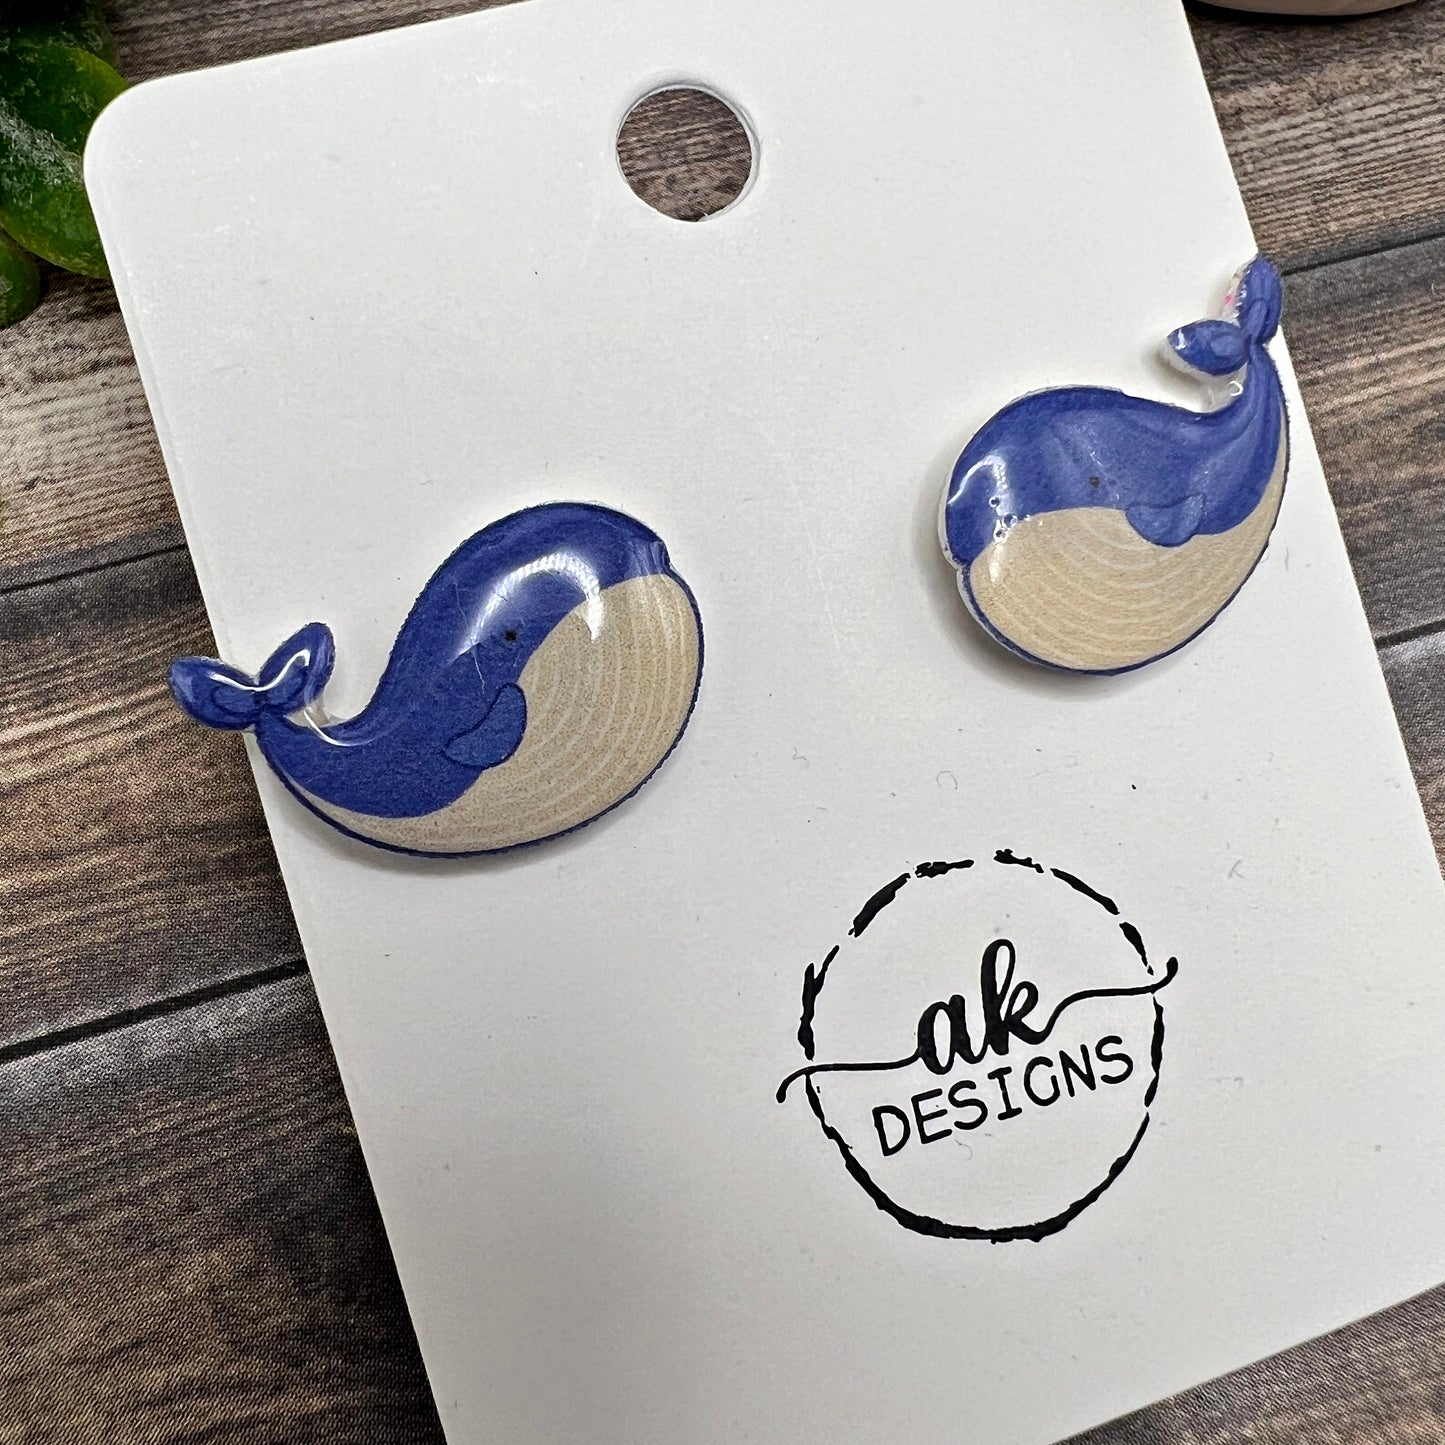 Whimsical Ocean Life Blue Whale Earrings - Cute Plastic Studs for Animal Lovers